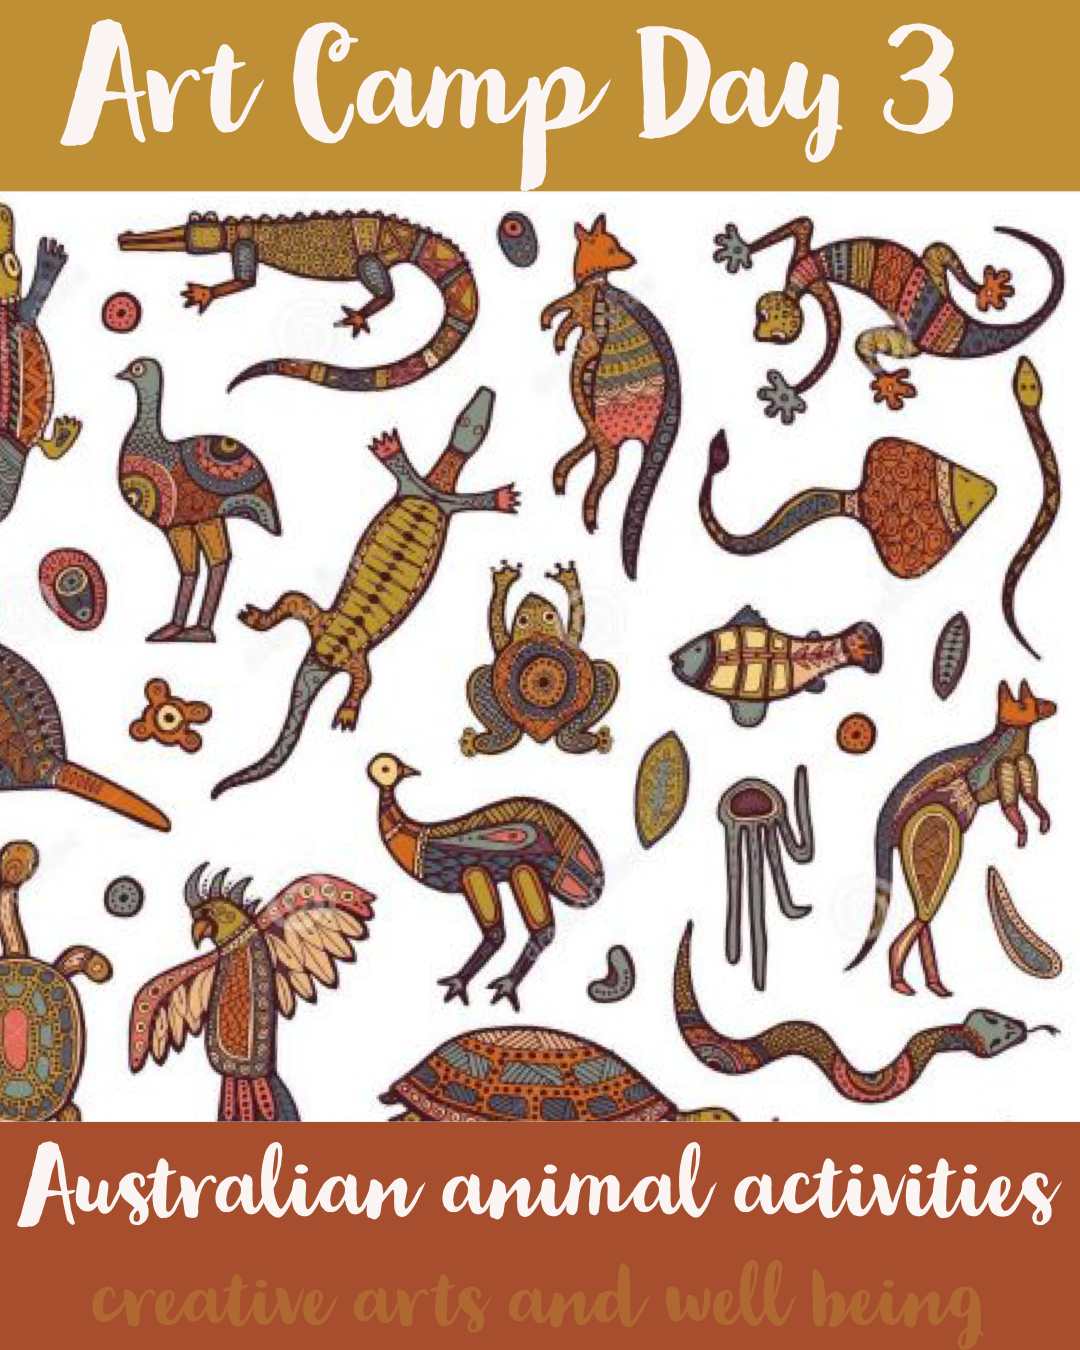 How to Make Aboriginal Art and Australian Animal Crafts –